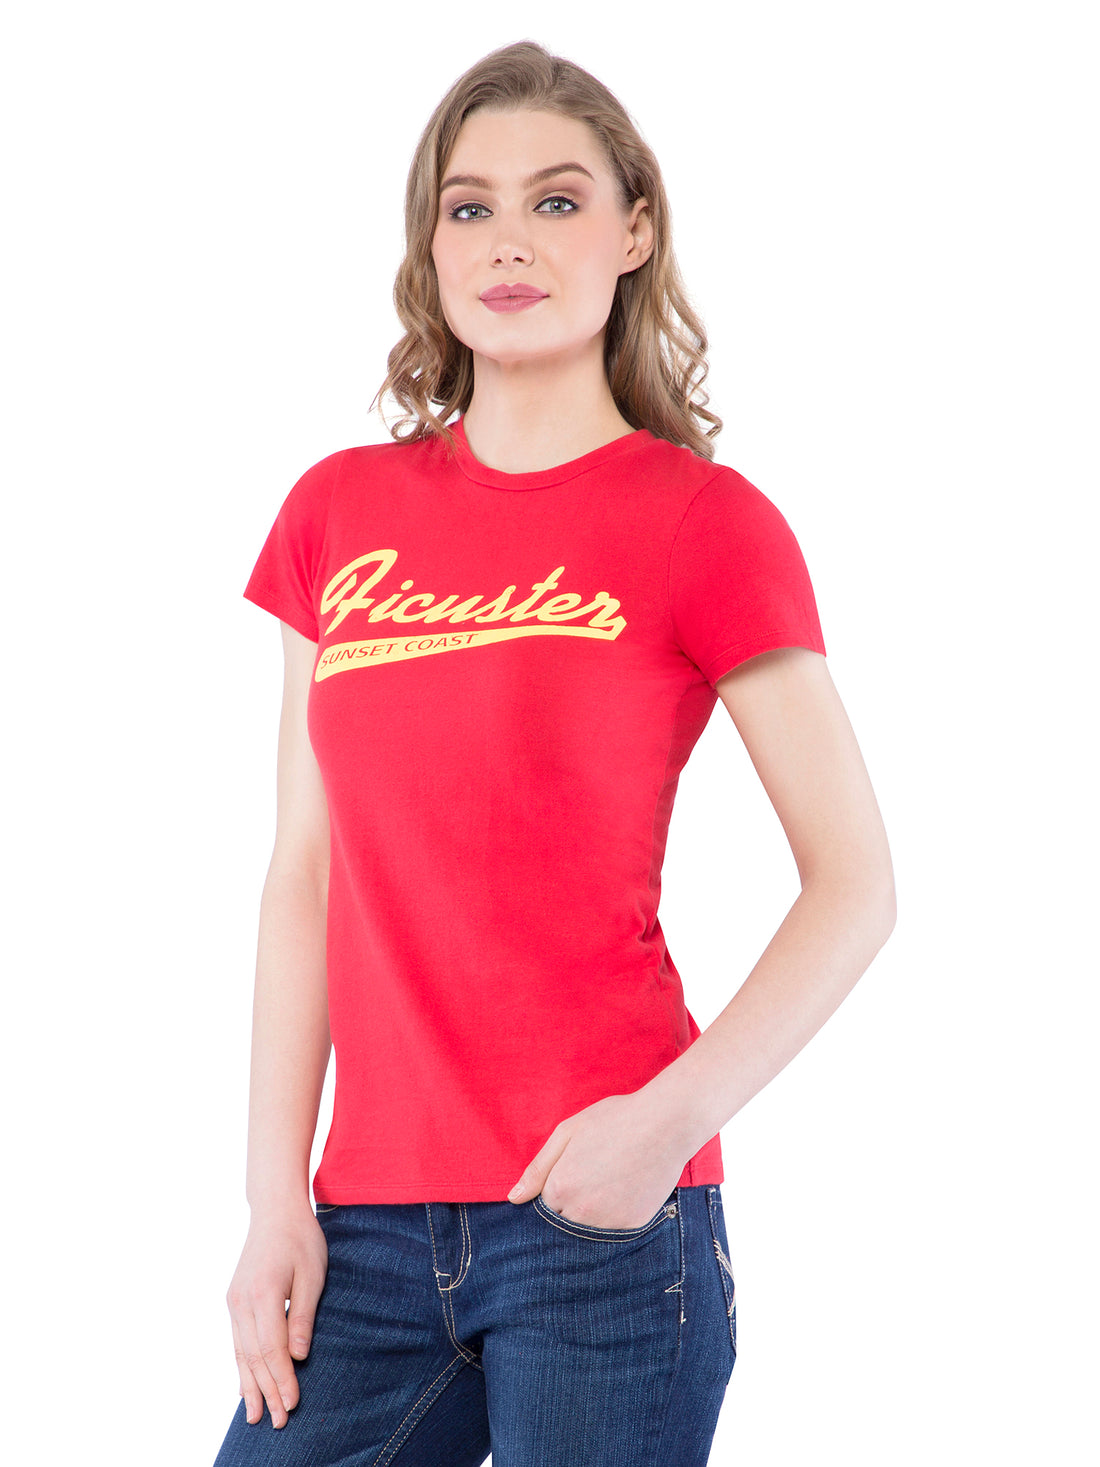 Ficuster Women Red Printed Crew Neck T-Shirt